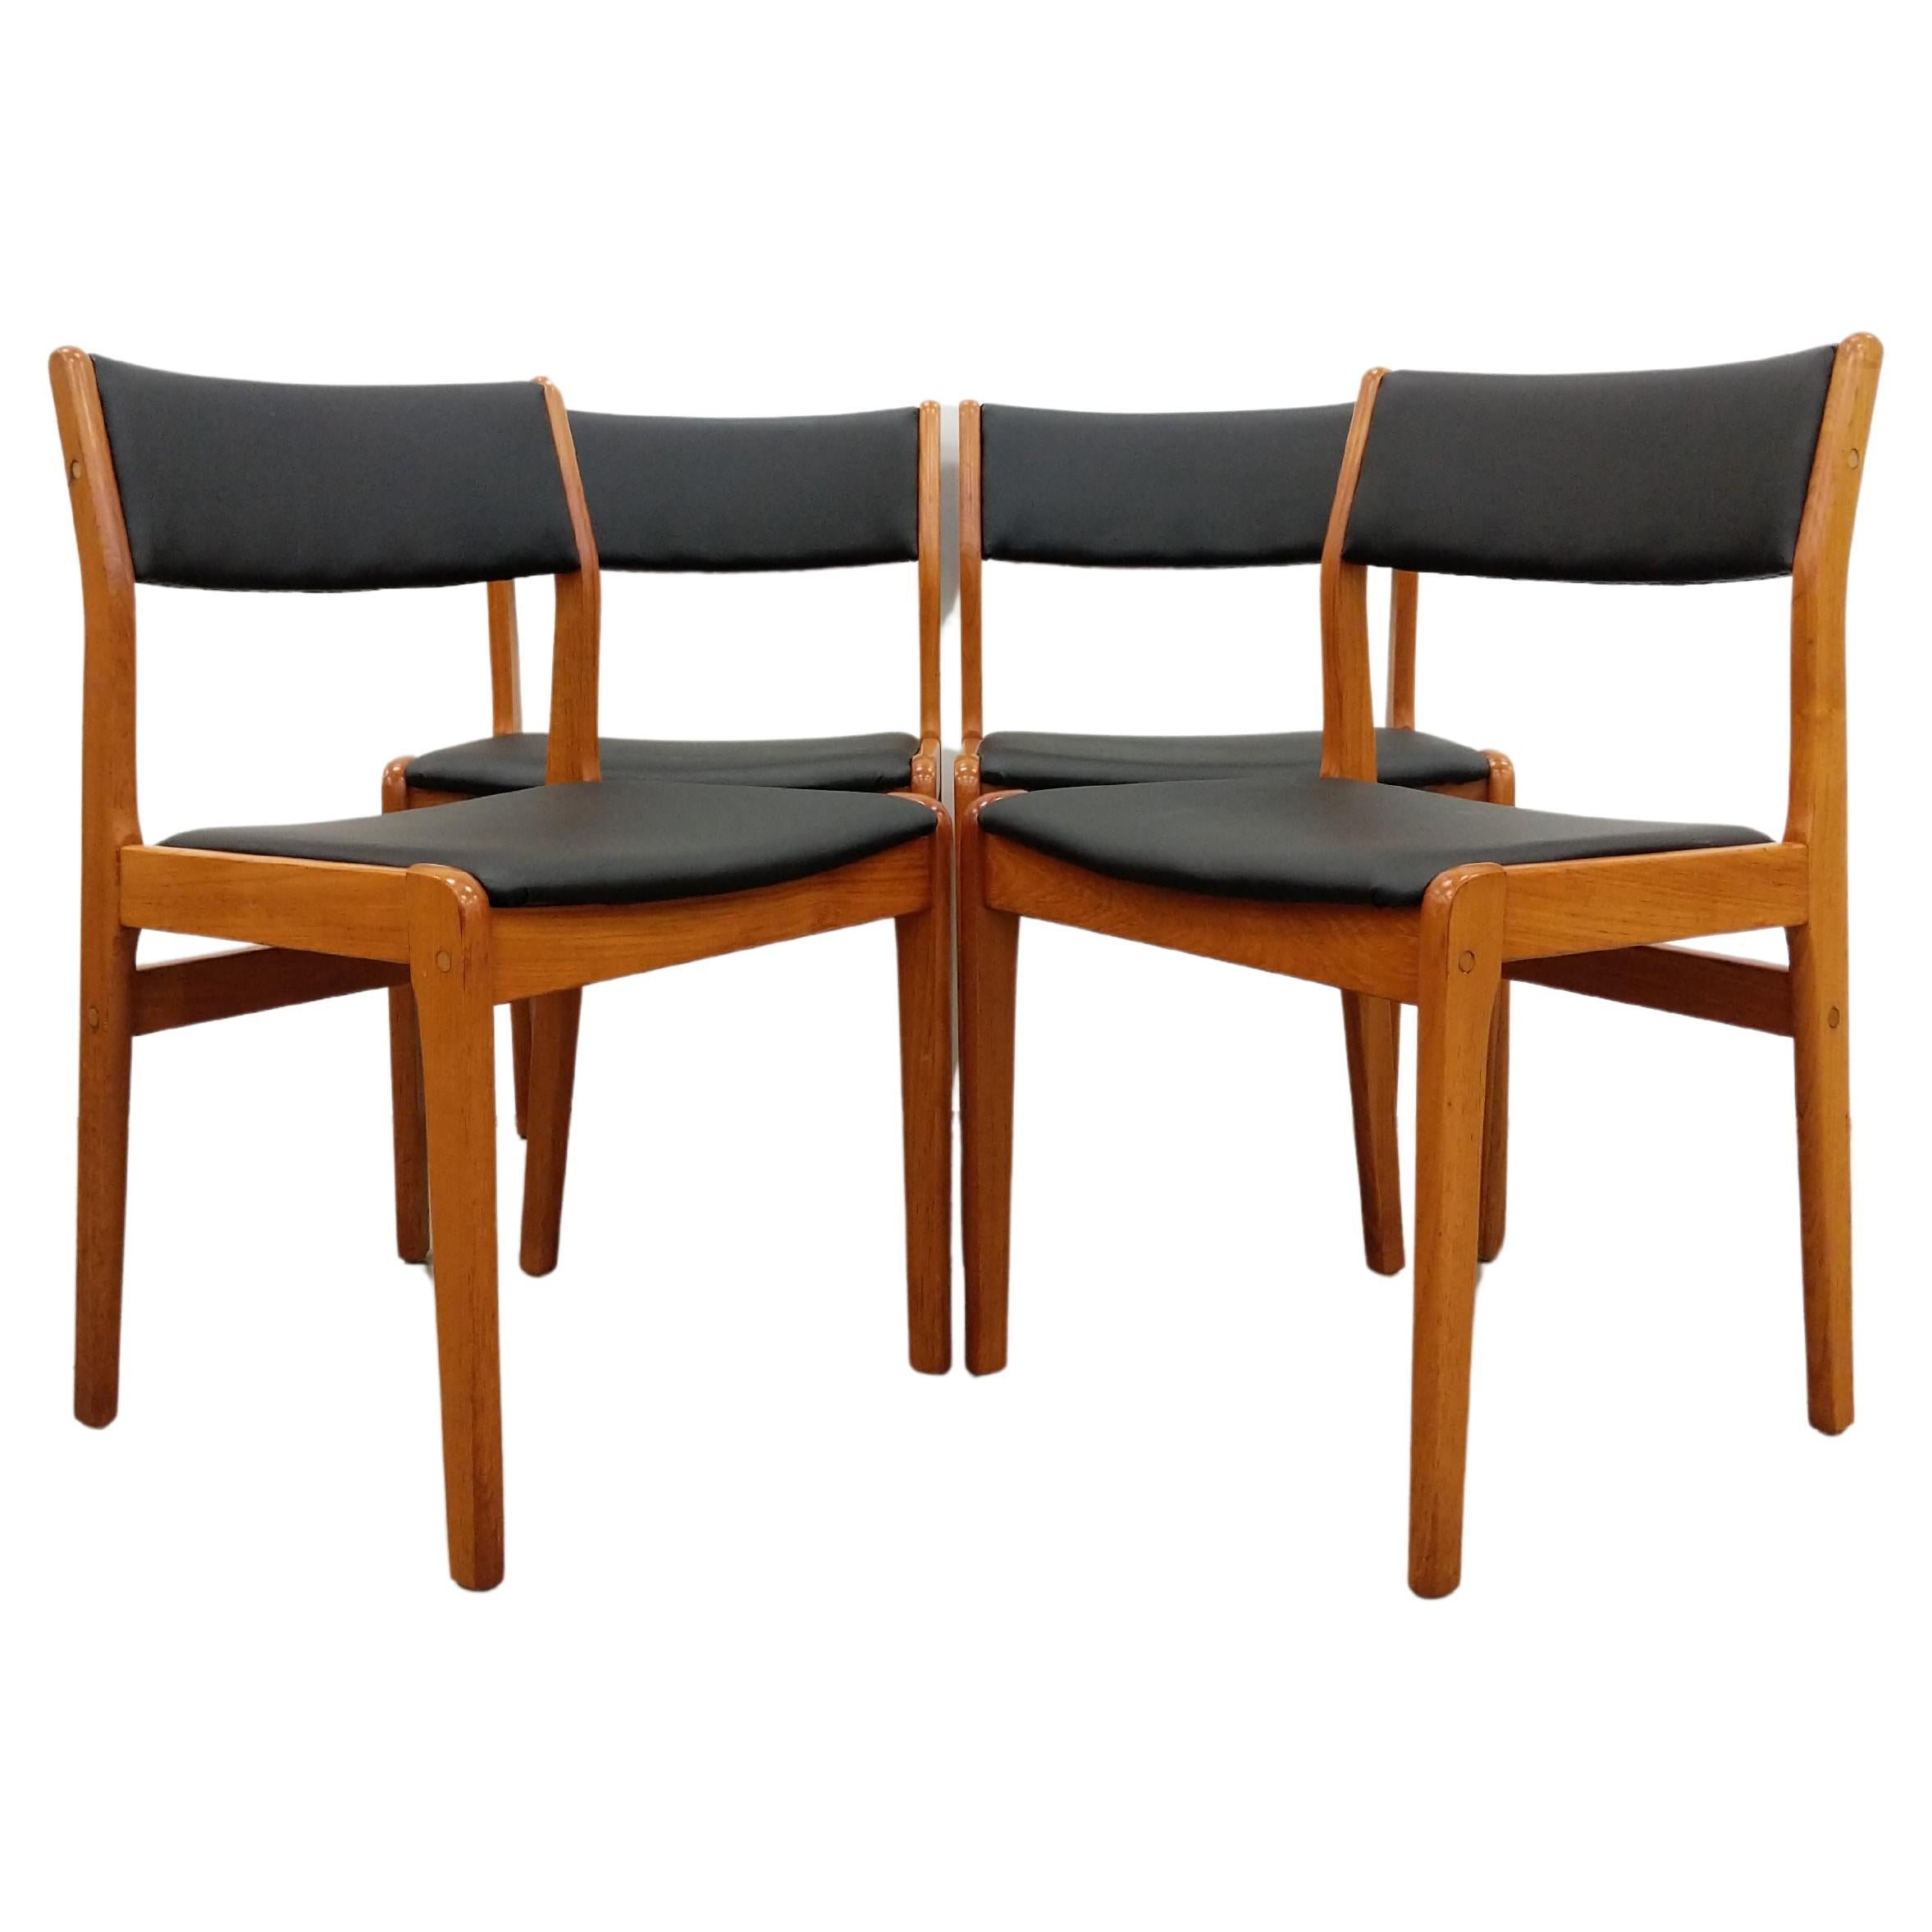 Set of 4 Vintage Danish Mid Century Modern Farstrup Dining Chairs